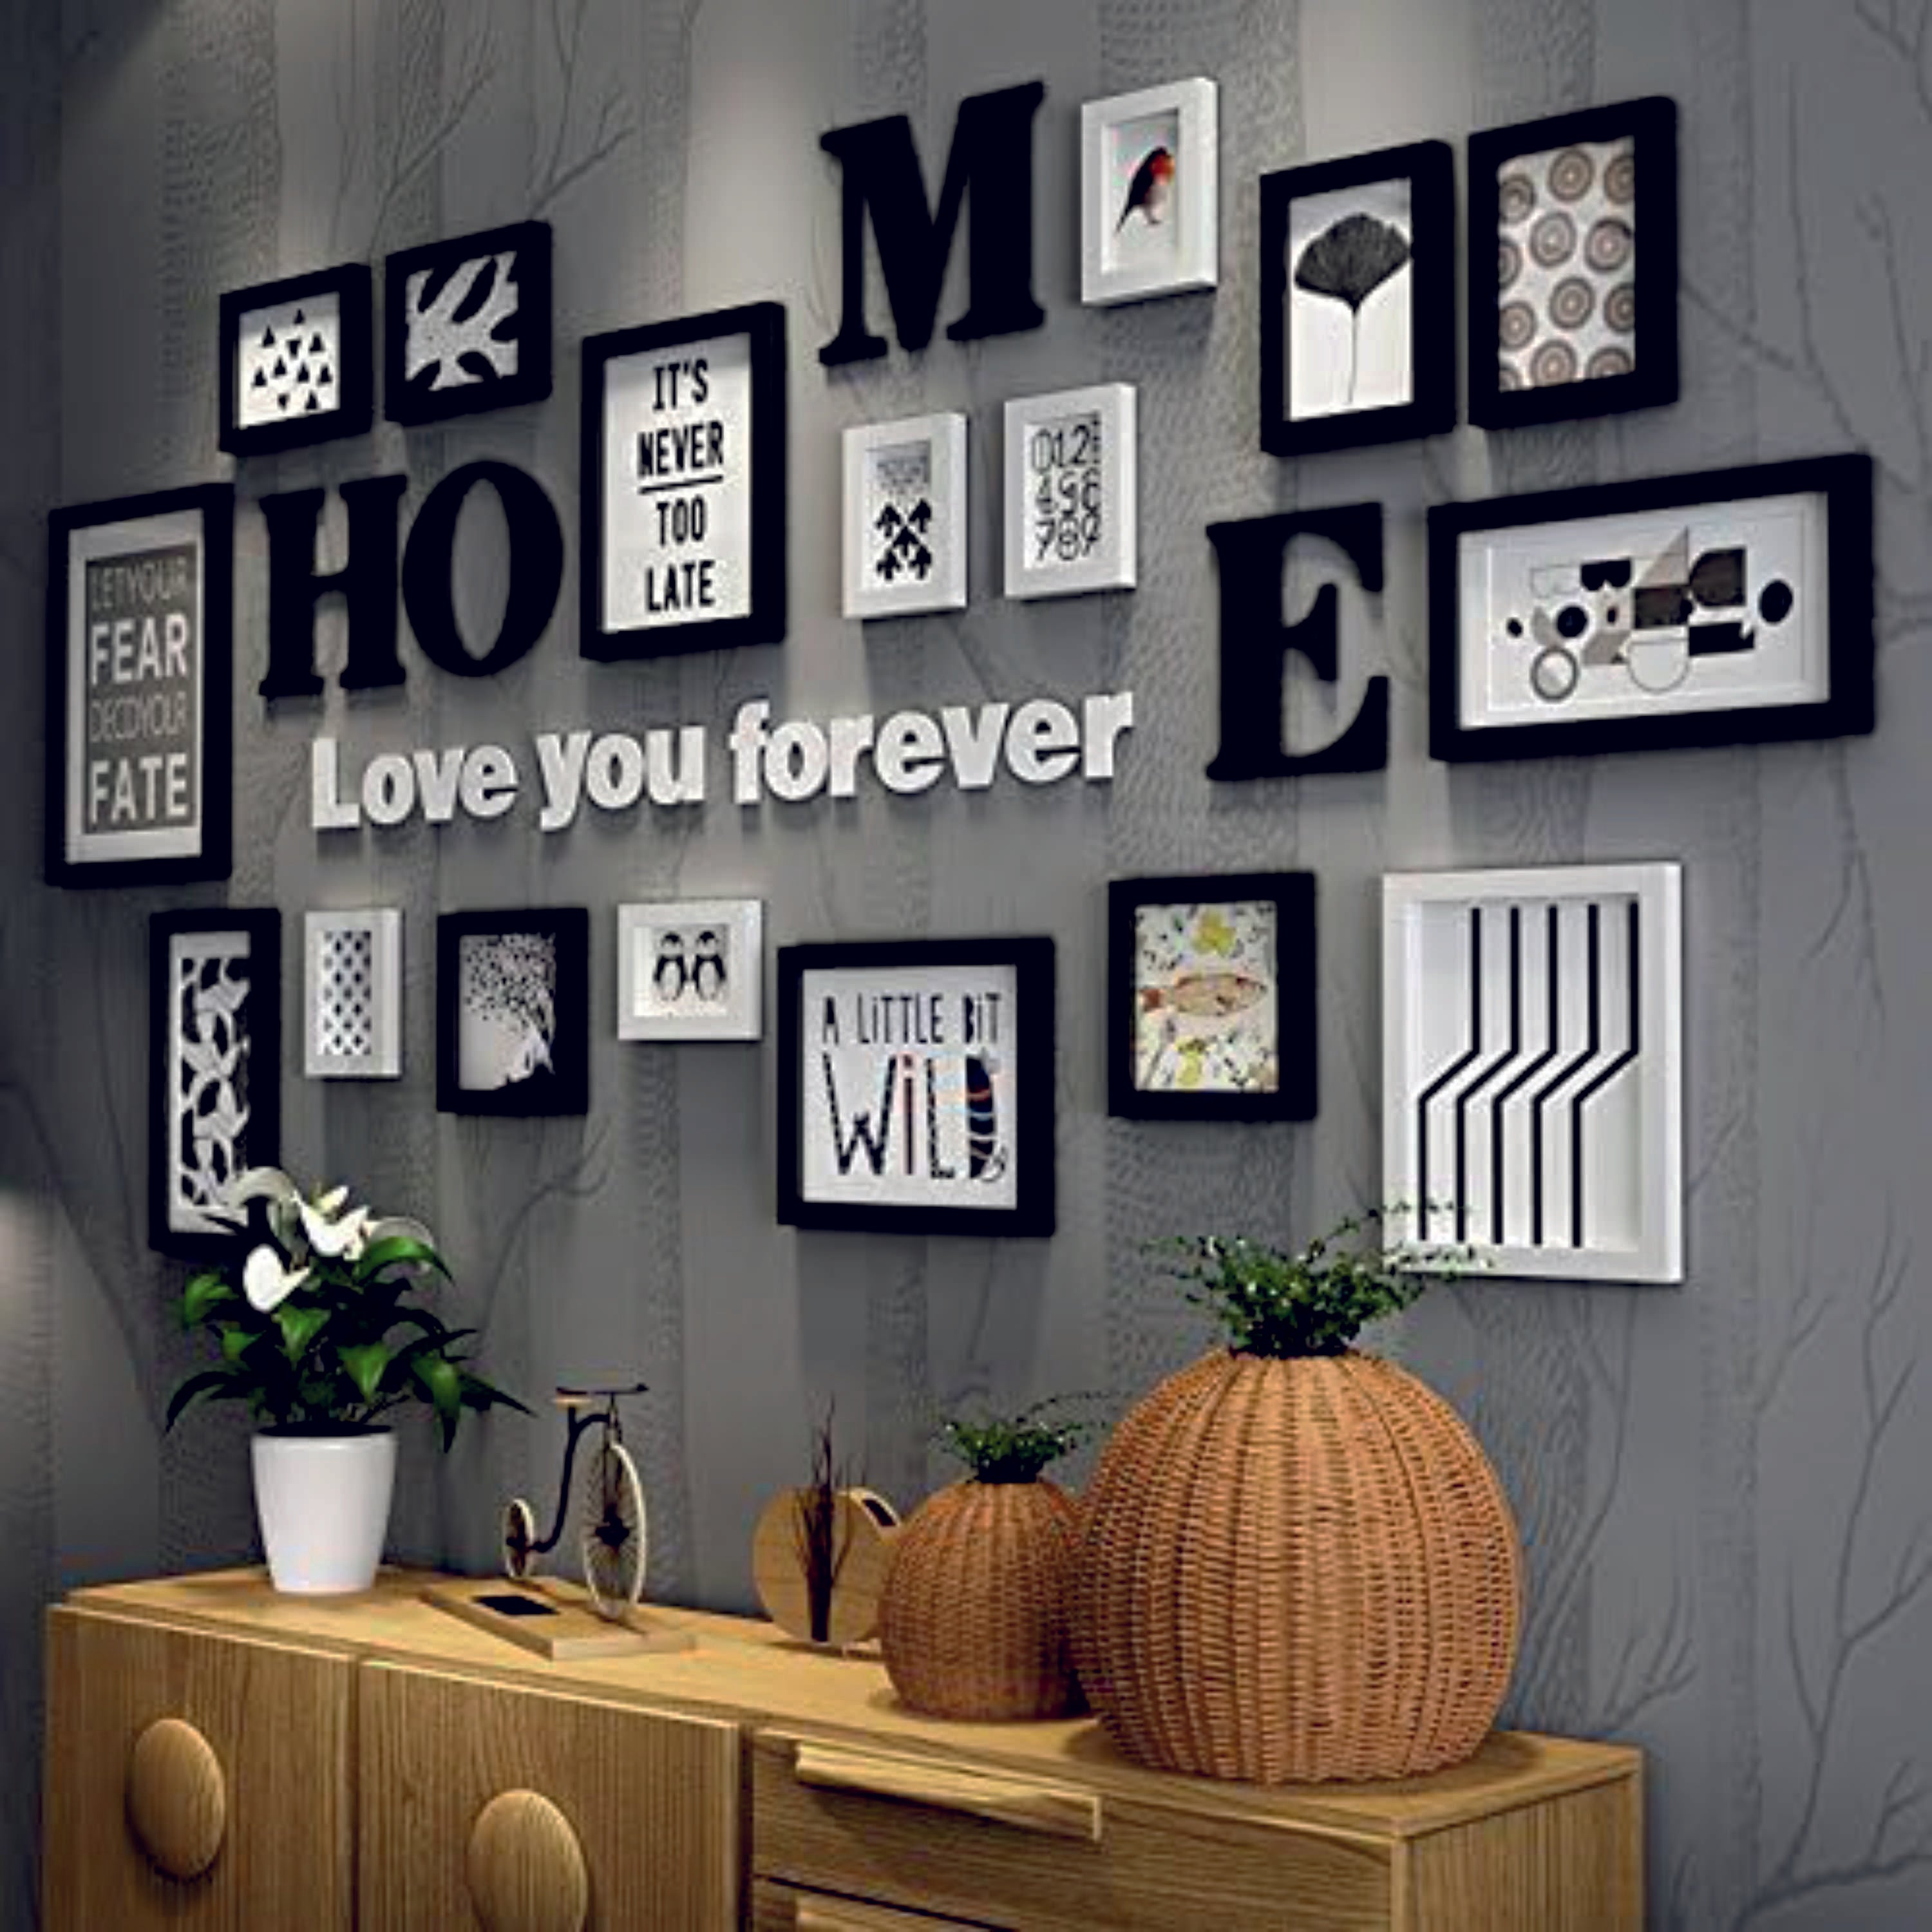 Home - Love You Forever - Wall Art Frames